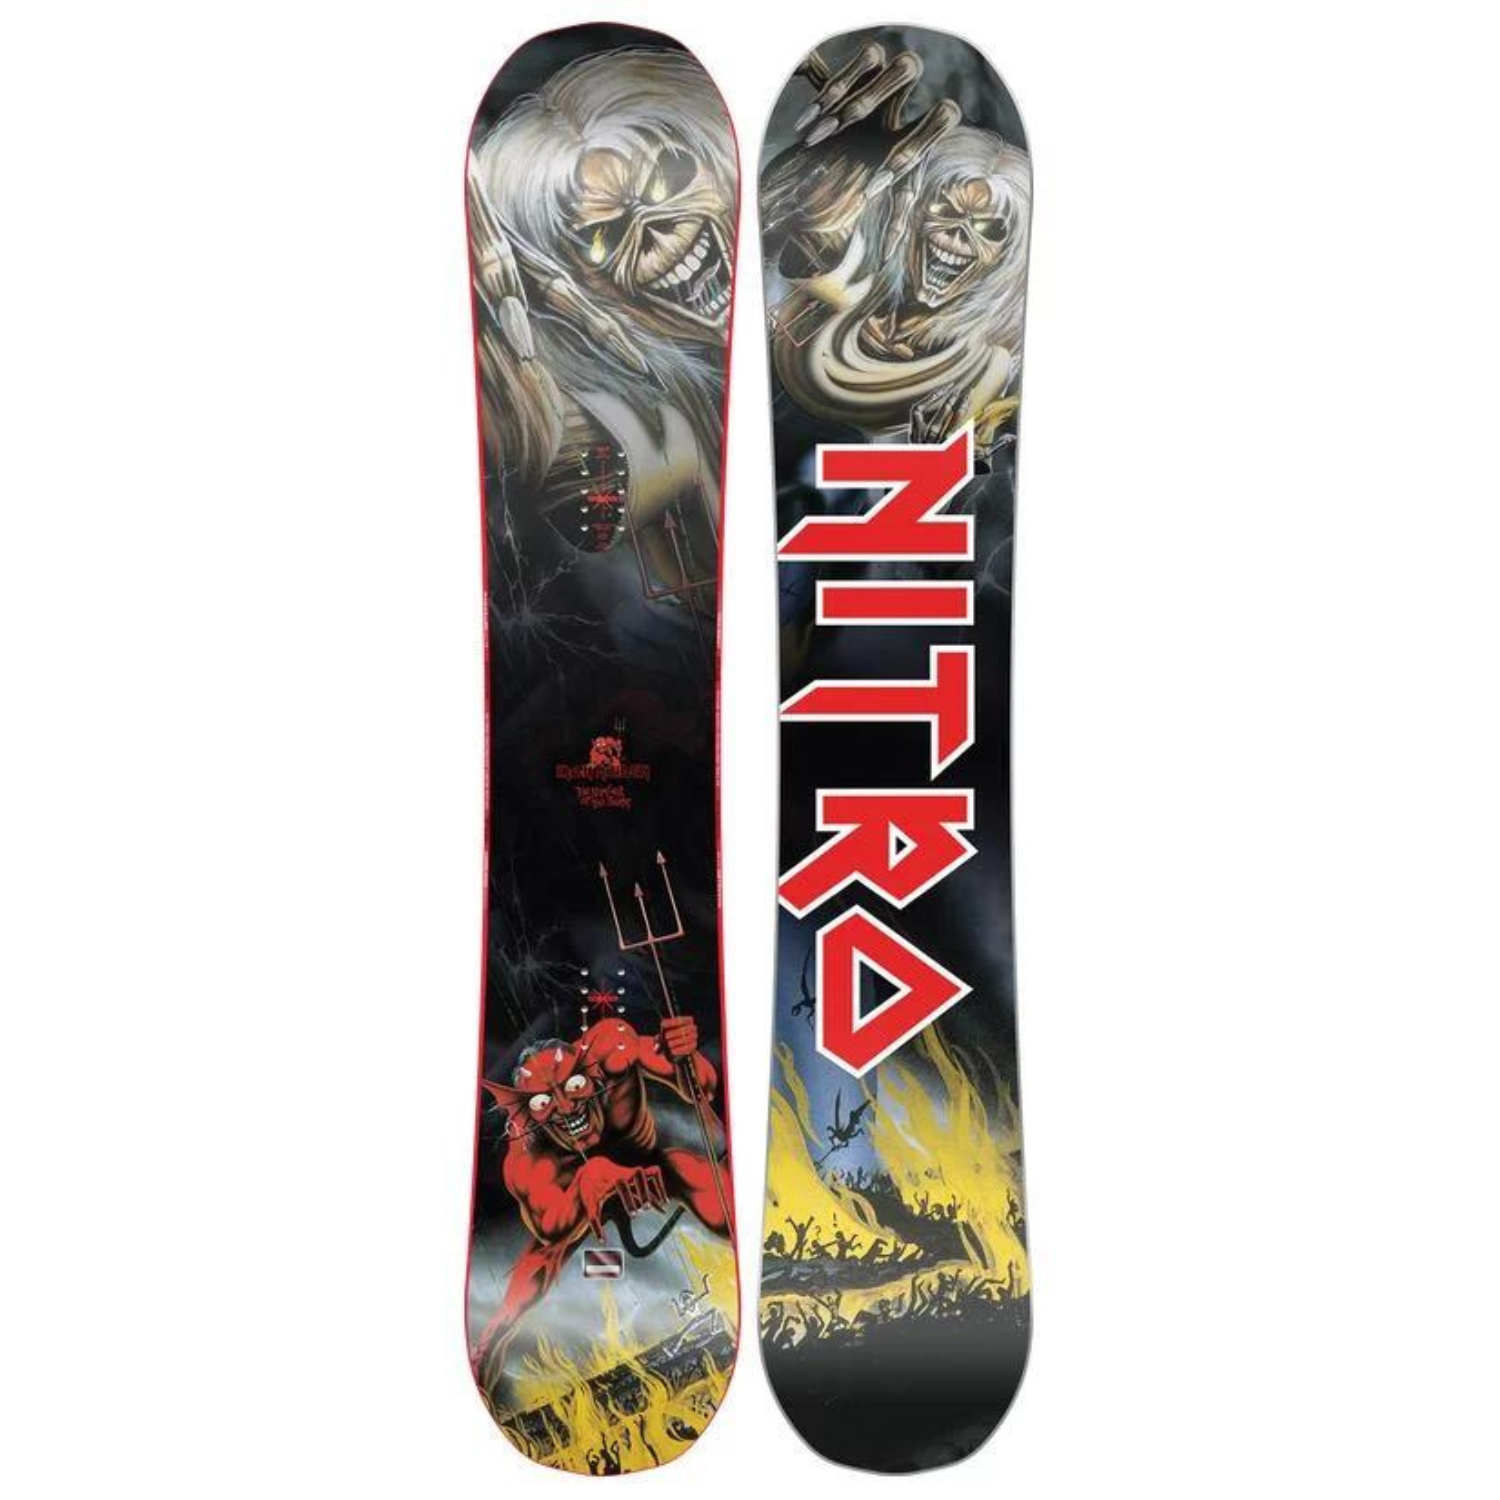 tsunami water Respectvol Nitro Beast x Iron Maiden Limited Edition Snowboard